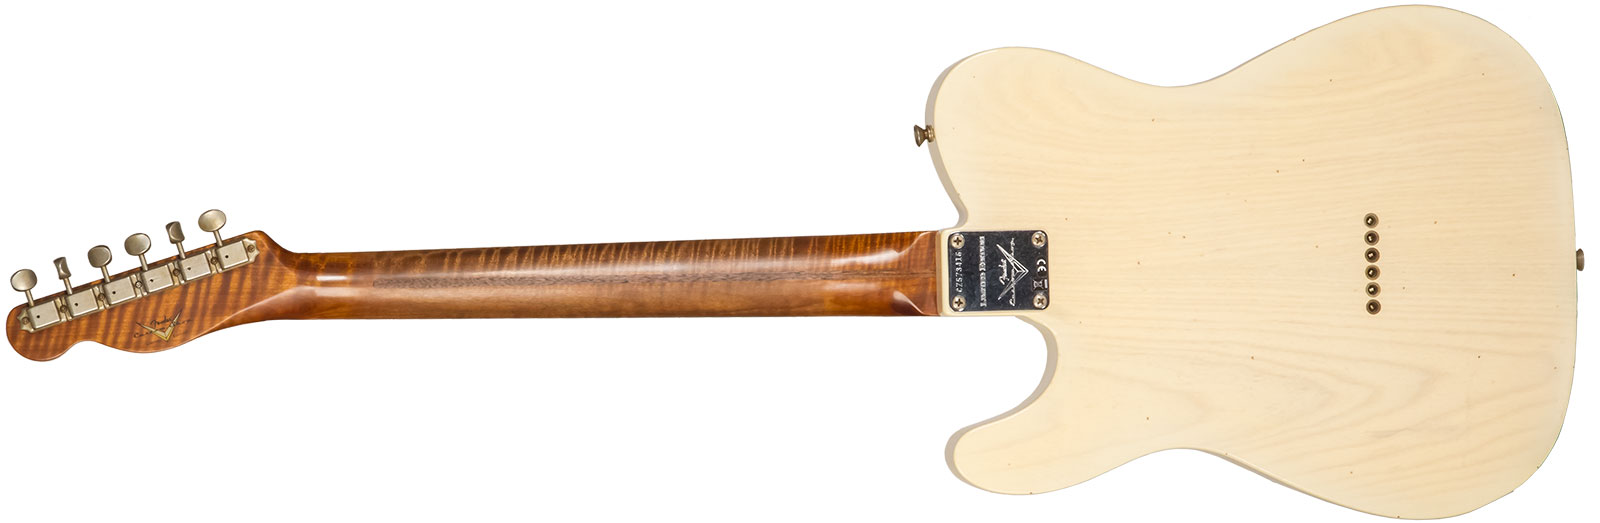 Fender Custom Shop Tele 1955 2s Ht Mn #cz573416 - Journeyman Relic Nocaster Blonde - E-Gitarre in Teleform - Variation 1